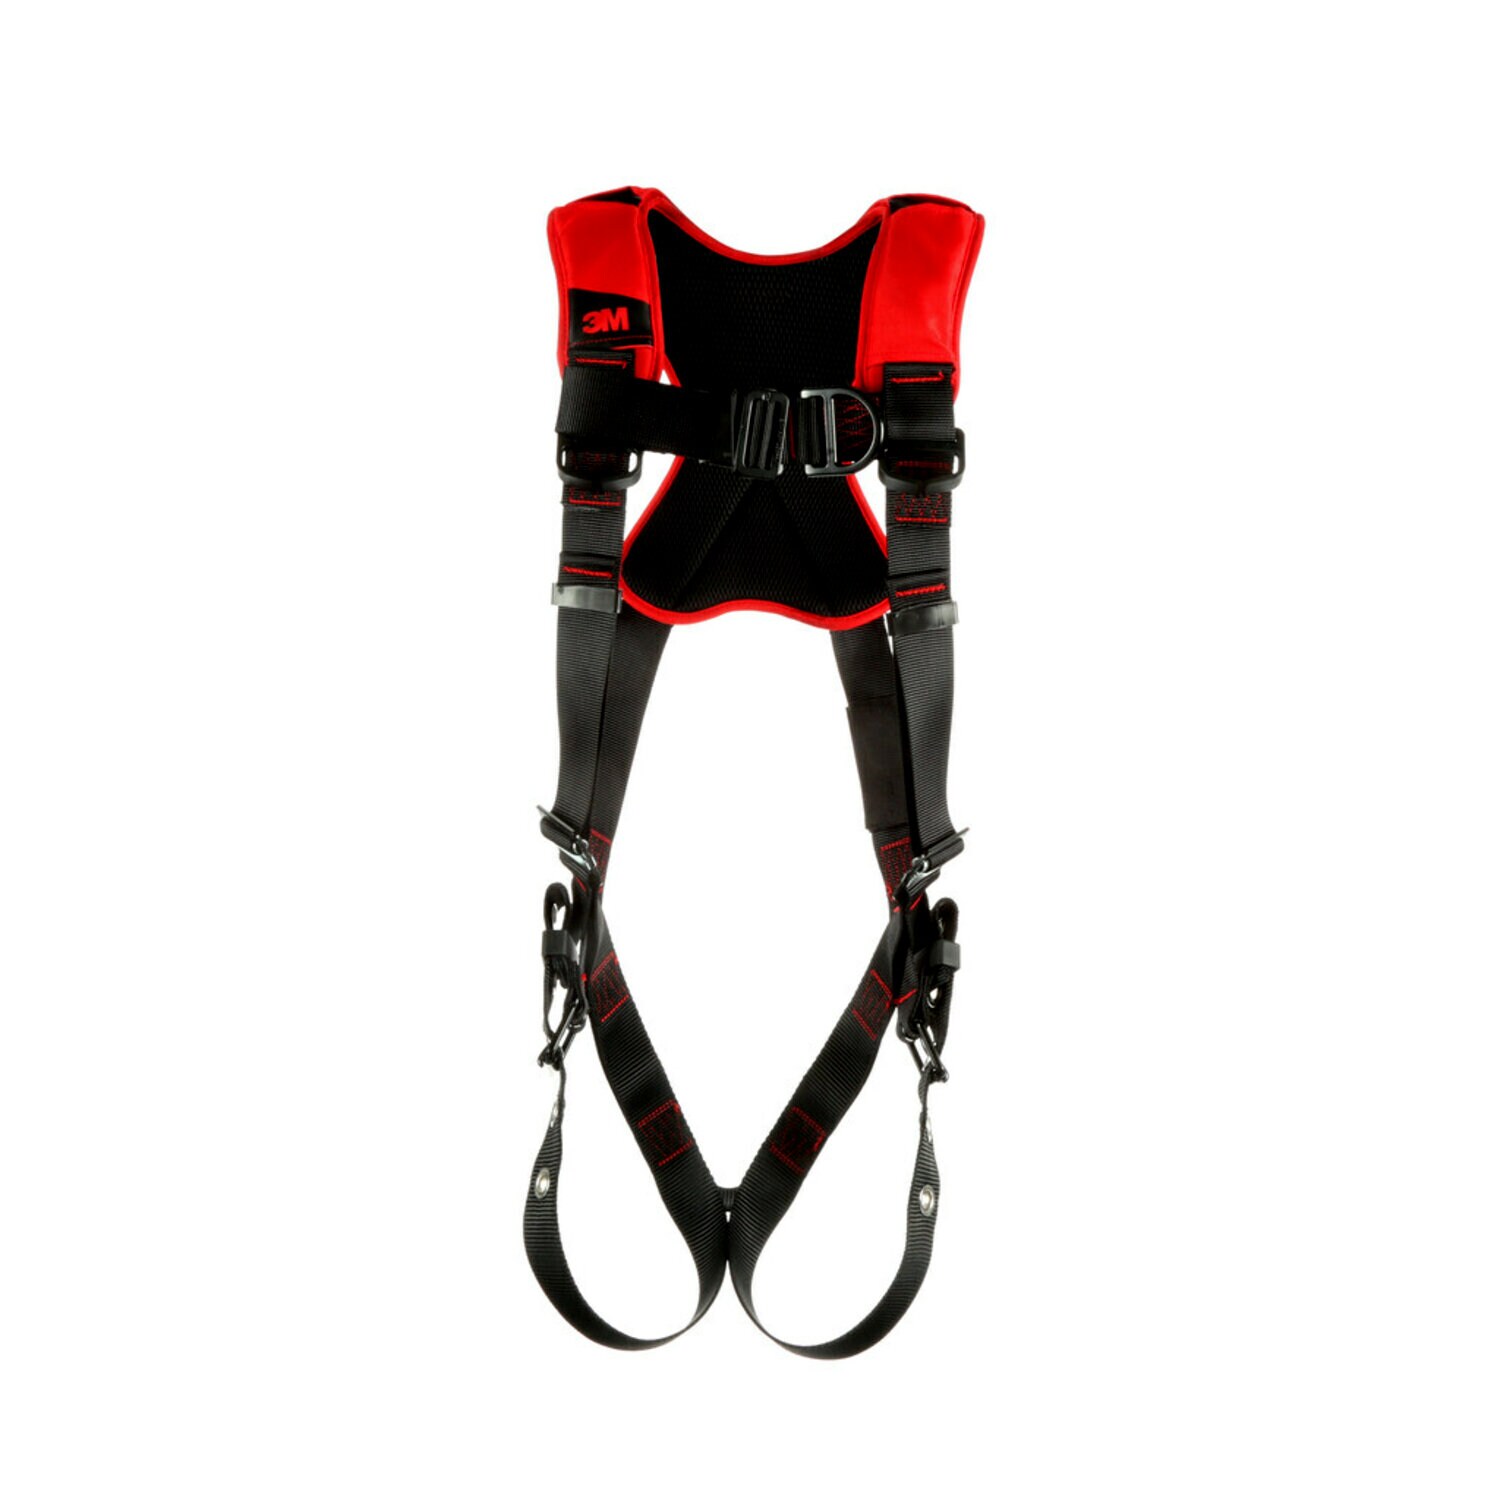 7012800421 - 3M Protecta P200 Comfort Vest Climbing Safety Harness 1161430, Medium/Large